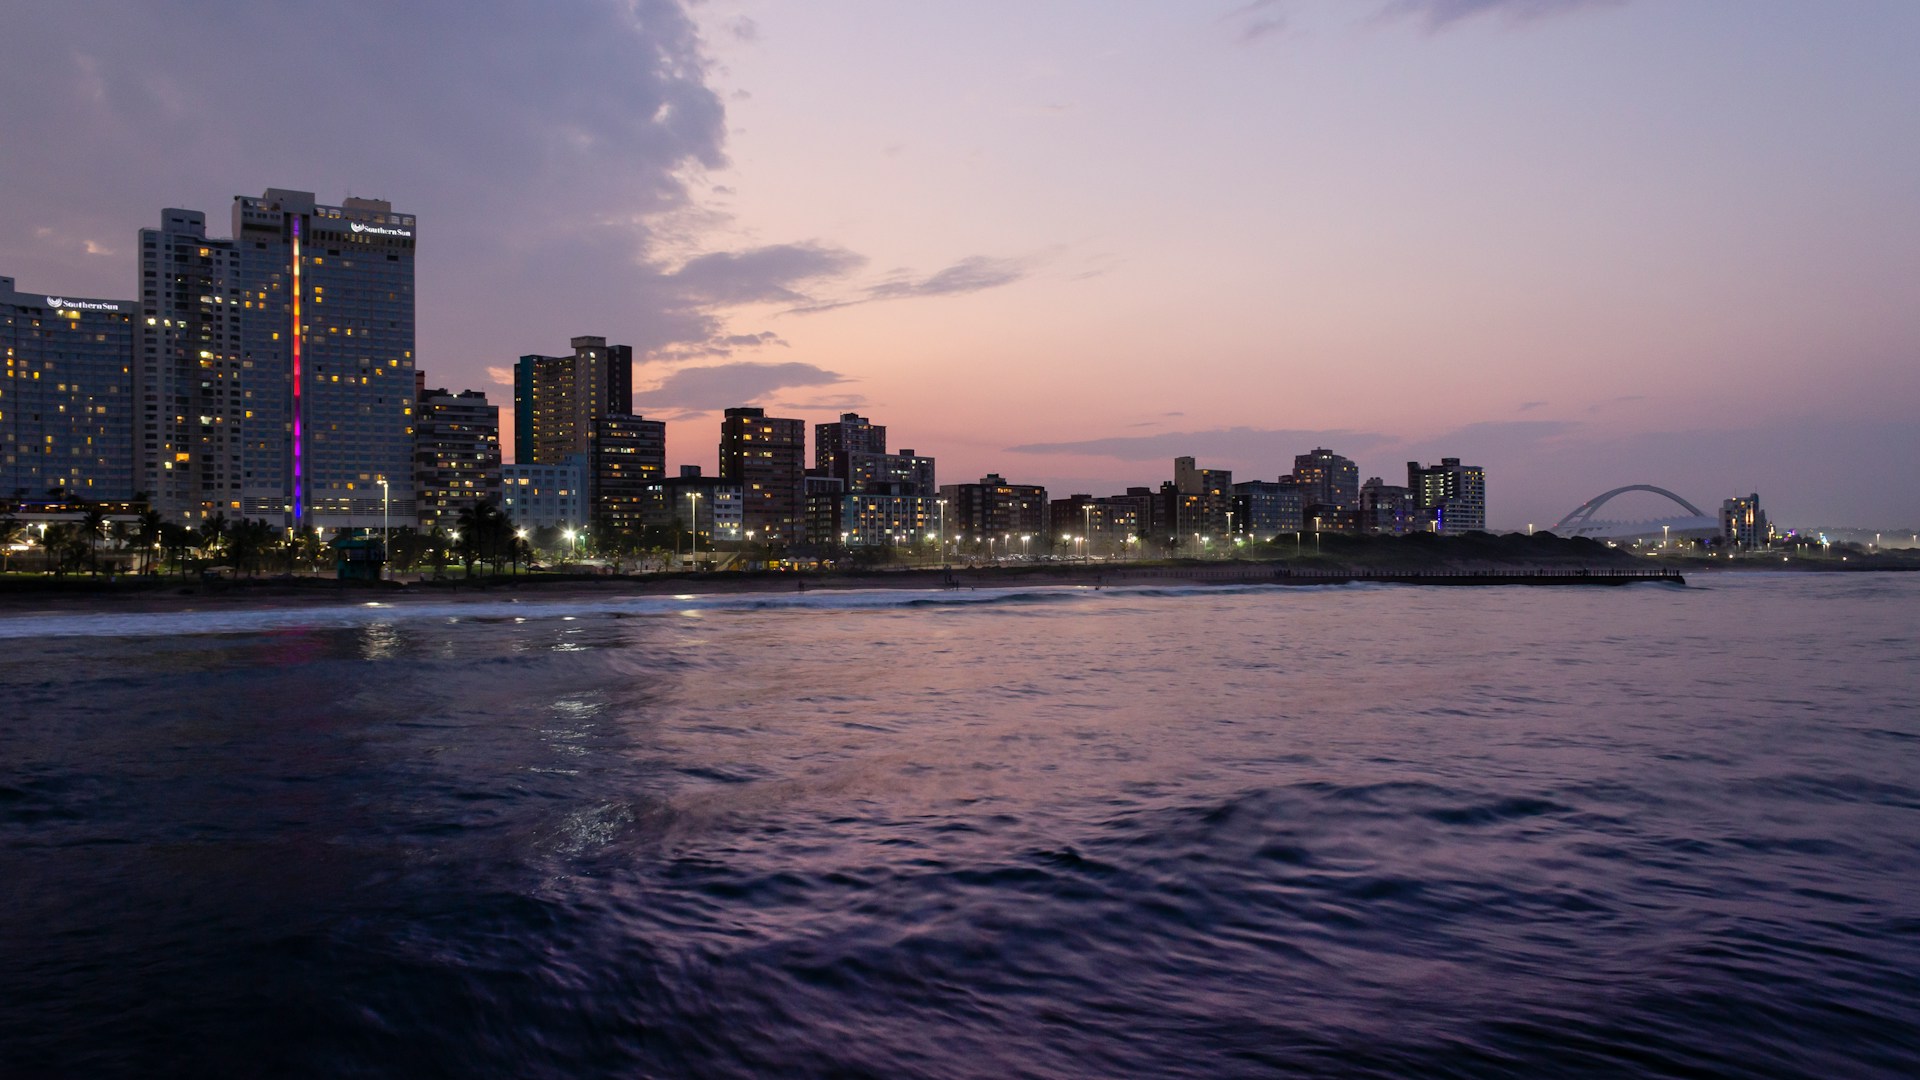 The Durban coastline at sunset